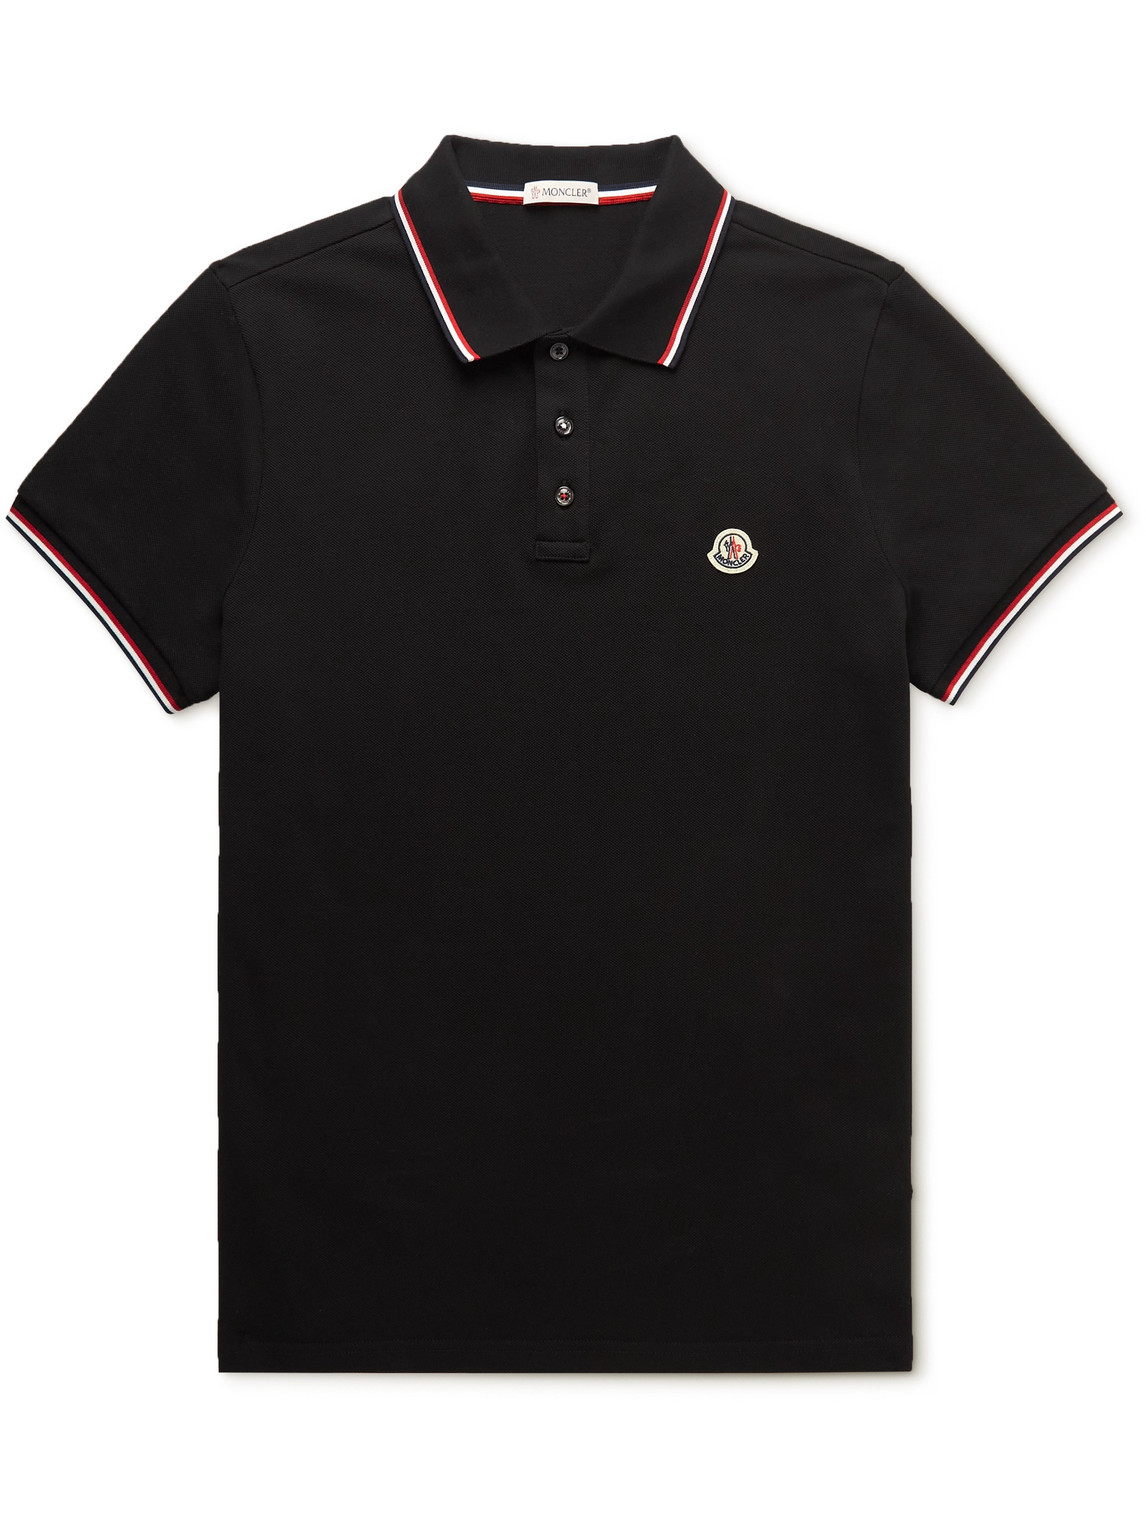 Moncler - Logo-Appliquéd Striped Cotton-Piqué Polo Shirt - Men - Black - L von Moncler